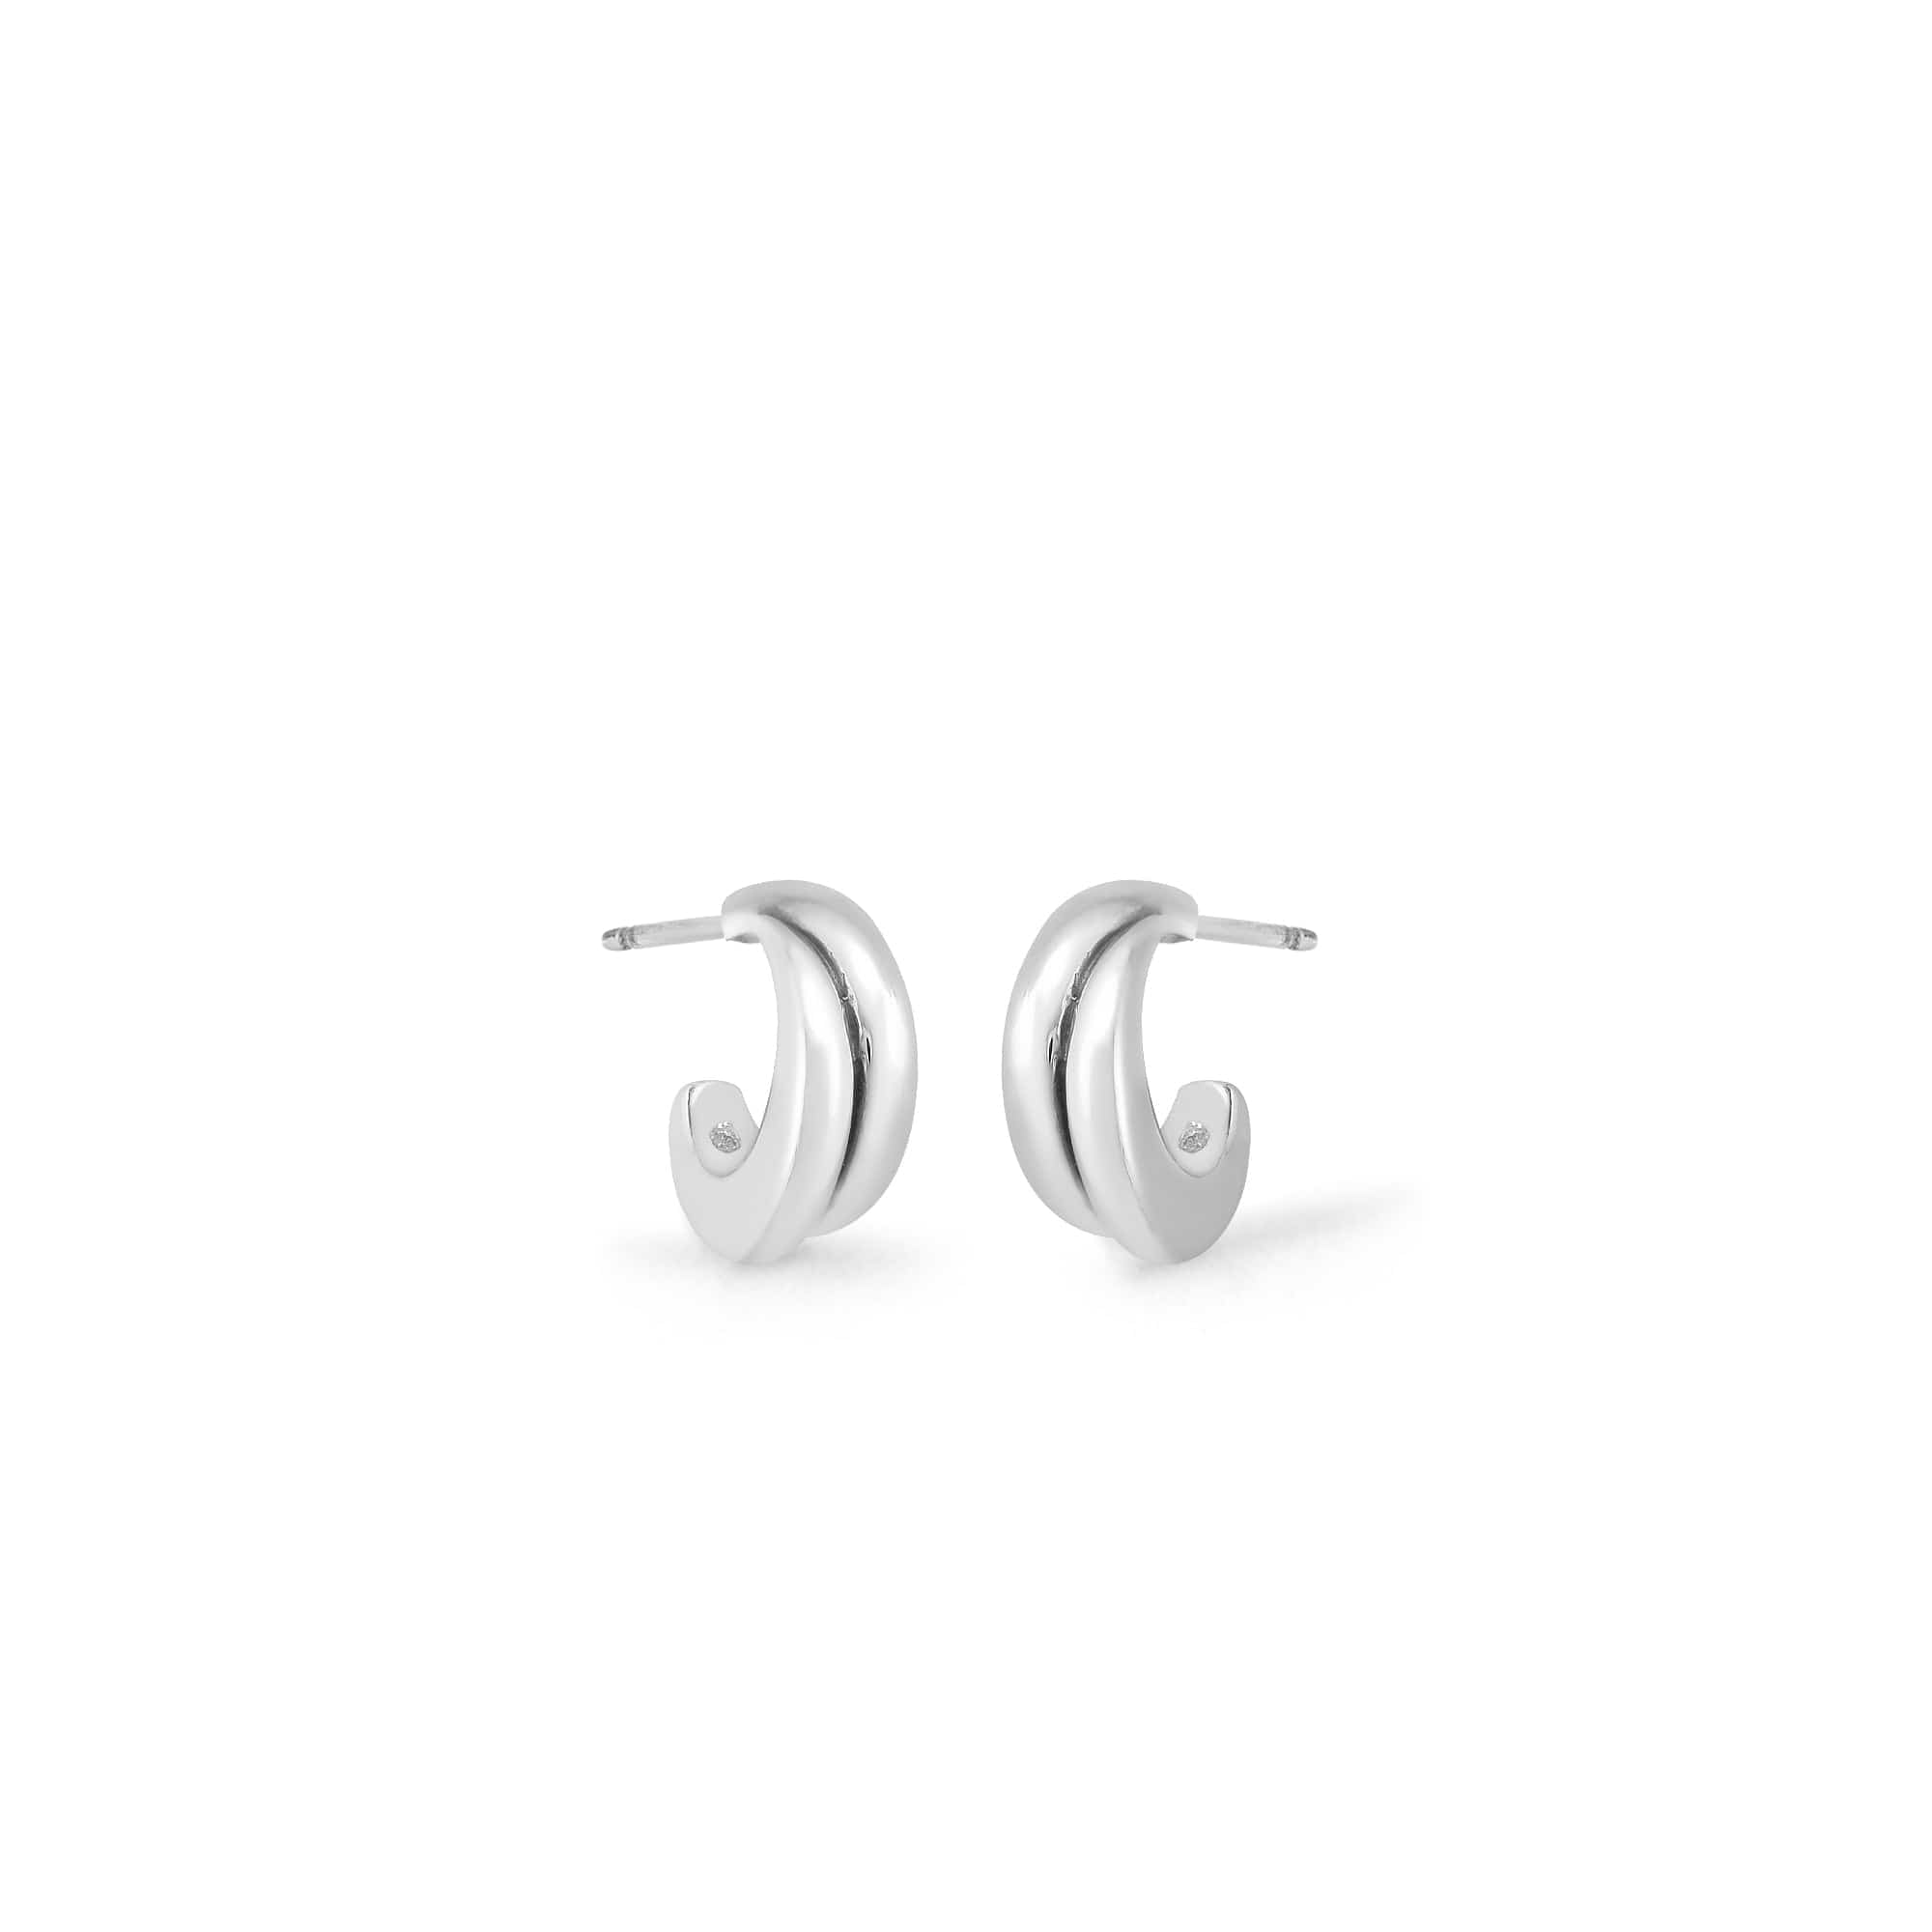 Boma Jewelry Earrings Double Lined Hoops